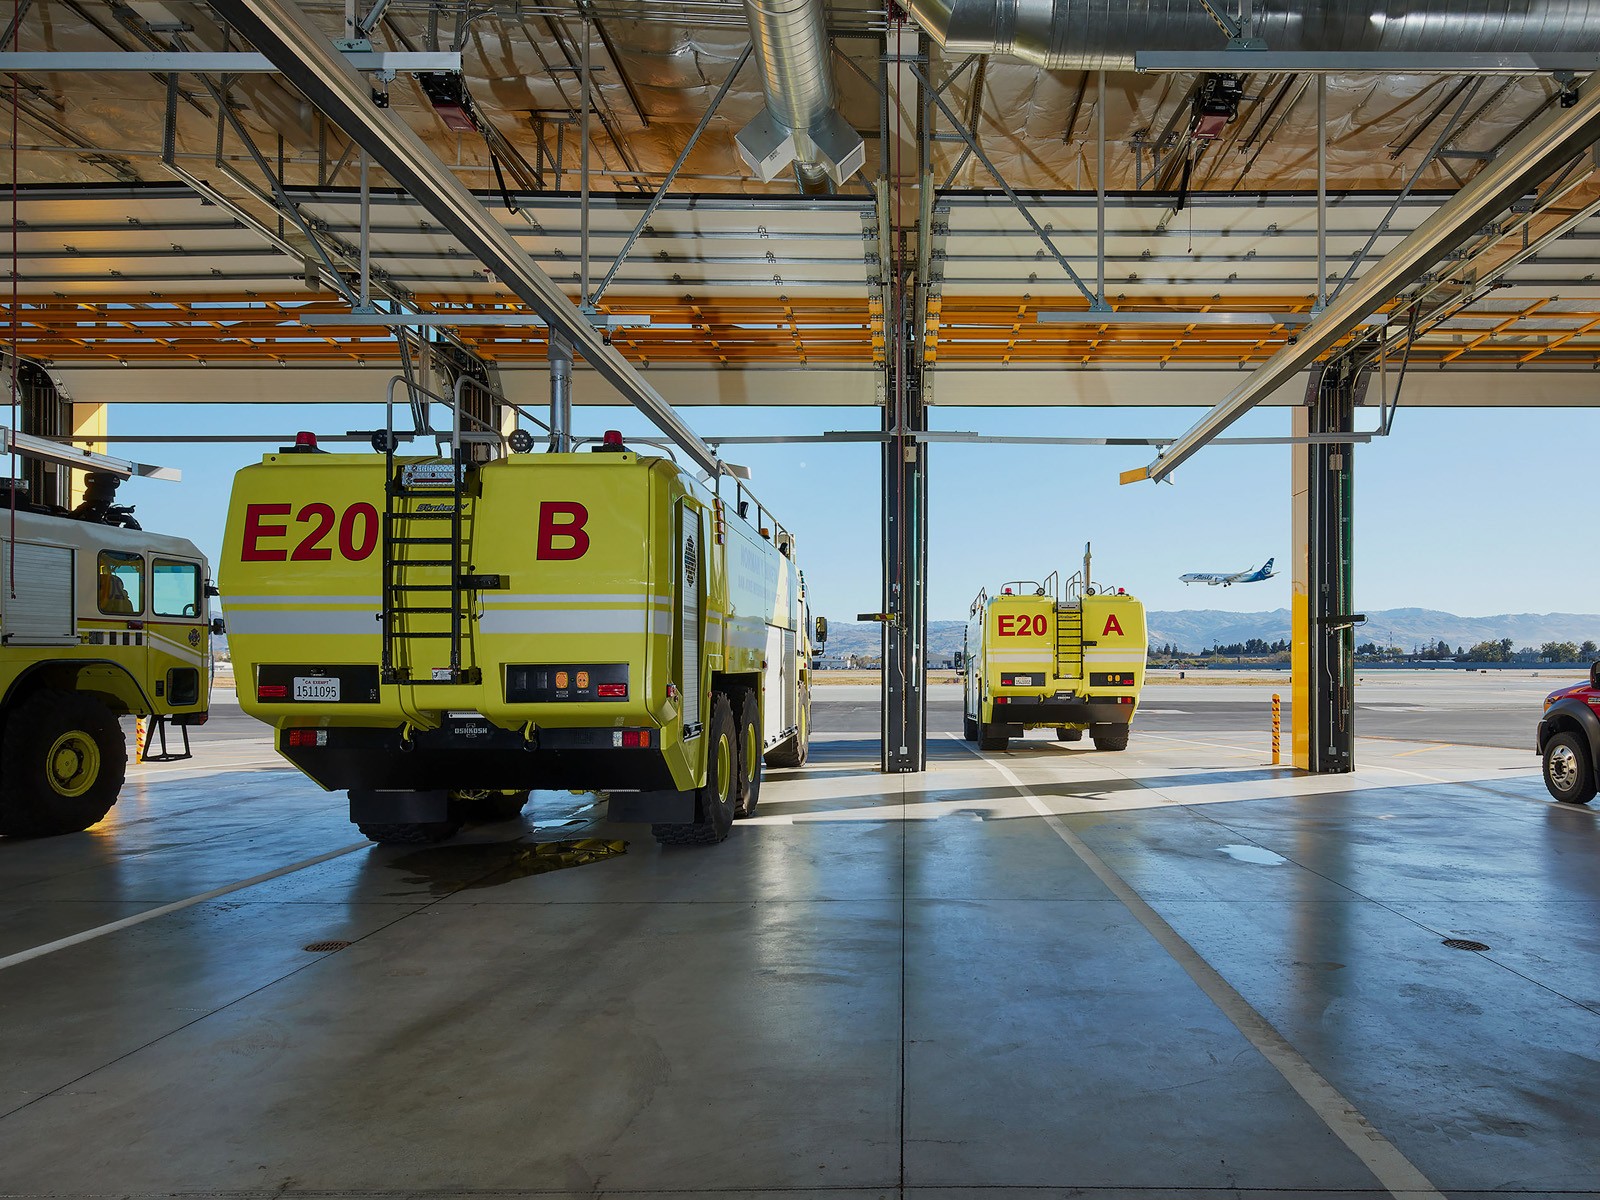 San Jose Mineta International Airport Aircraft Rescue & Fire (AARF) Fighting Facility